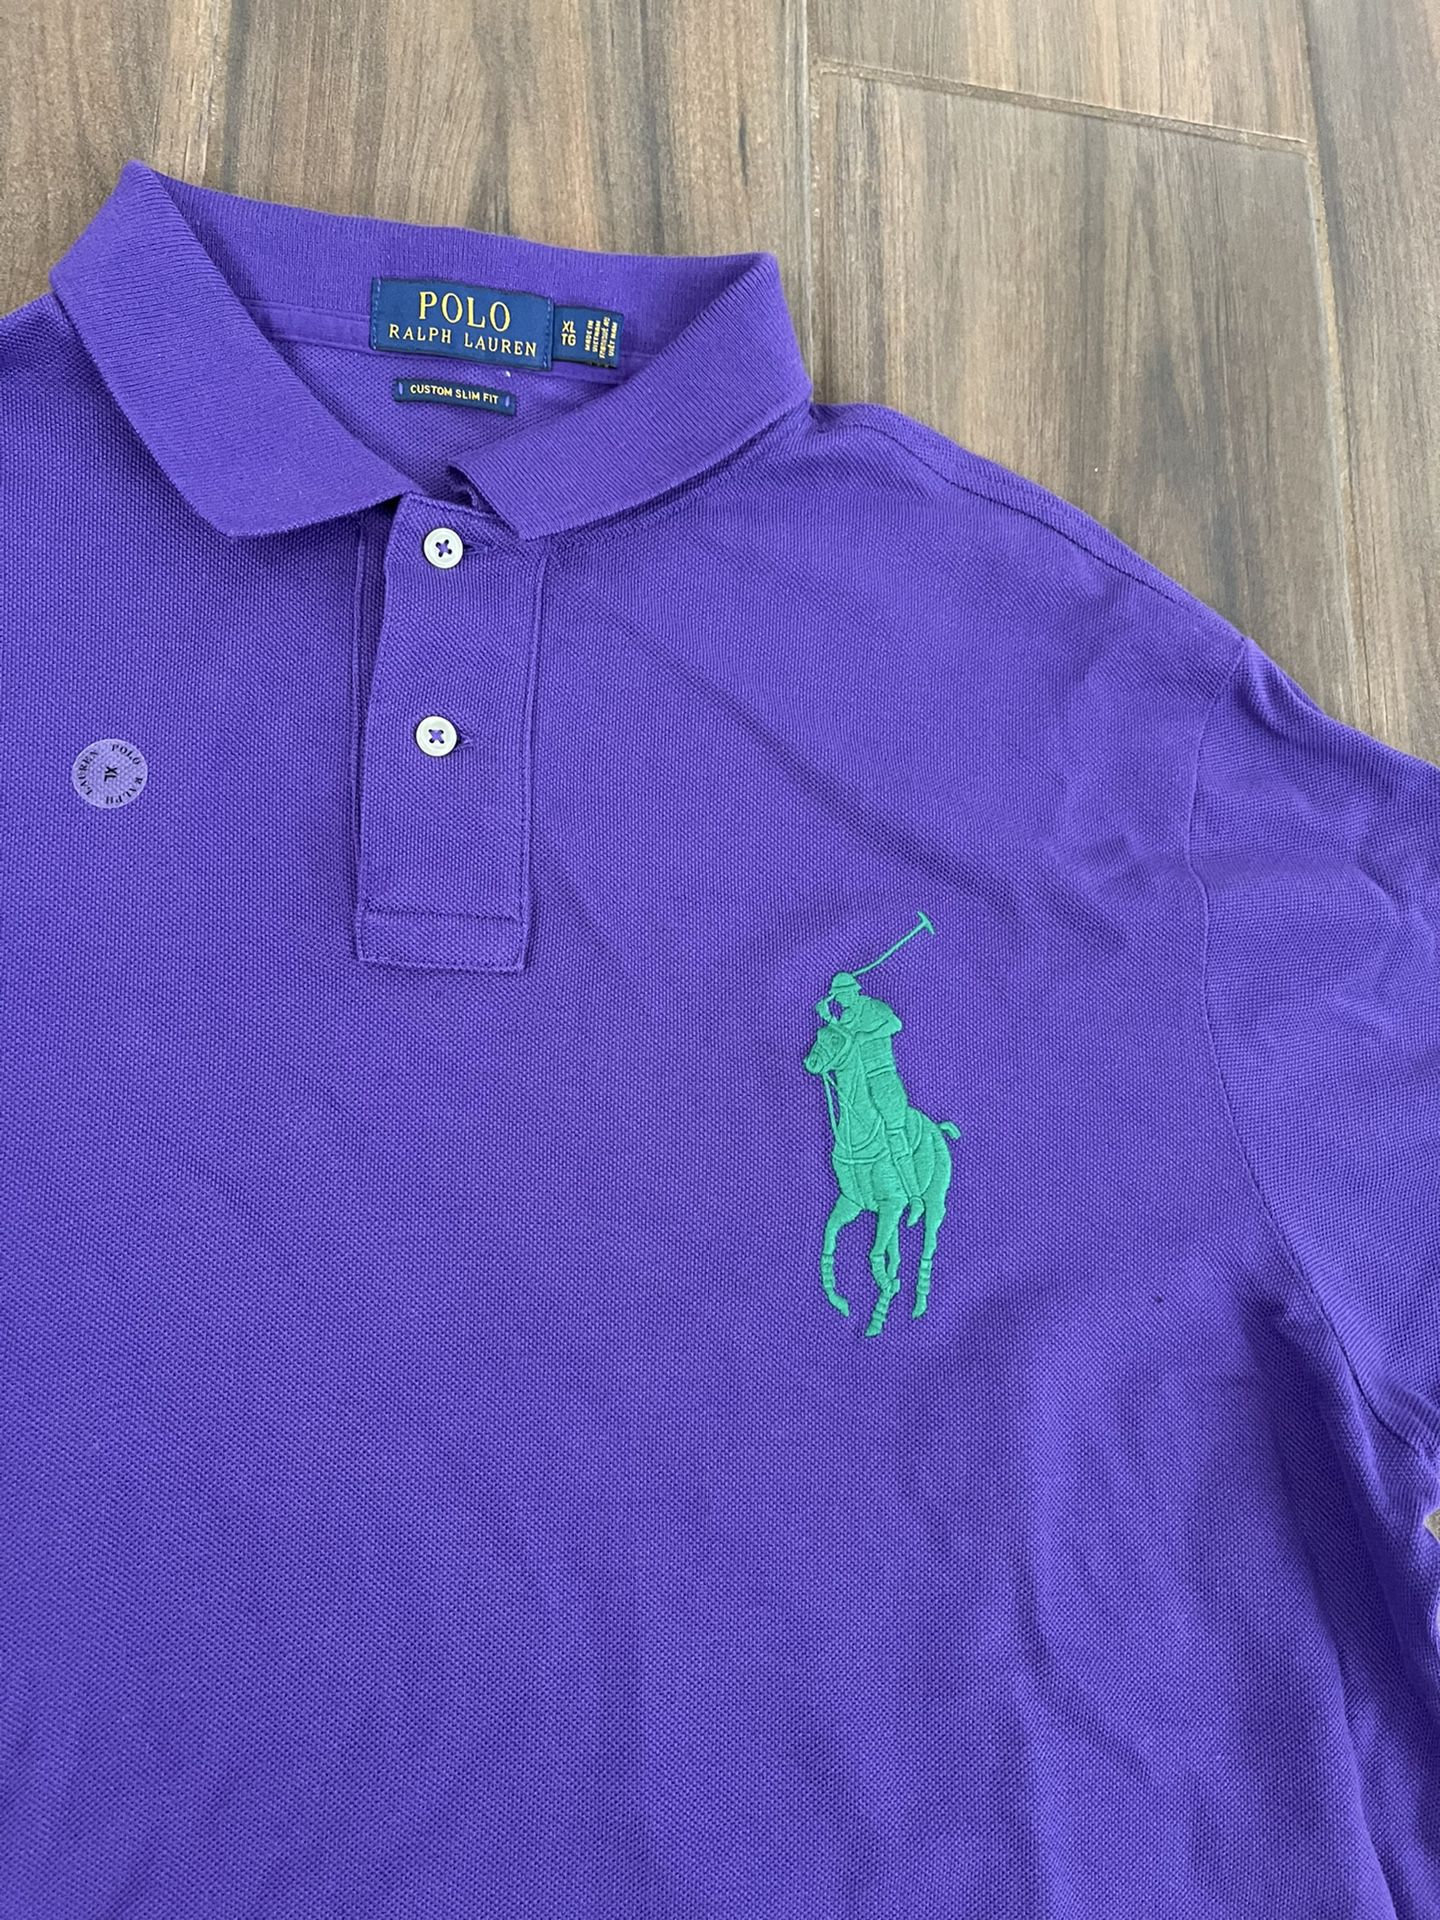 Polo Ralph Lauren Big Pony Shirt 